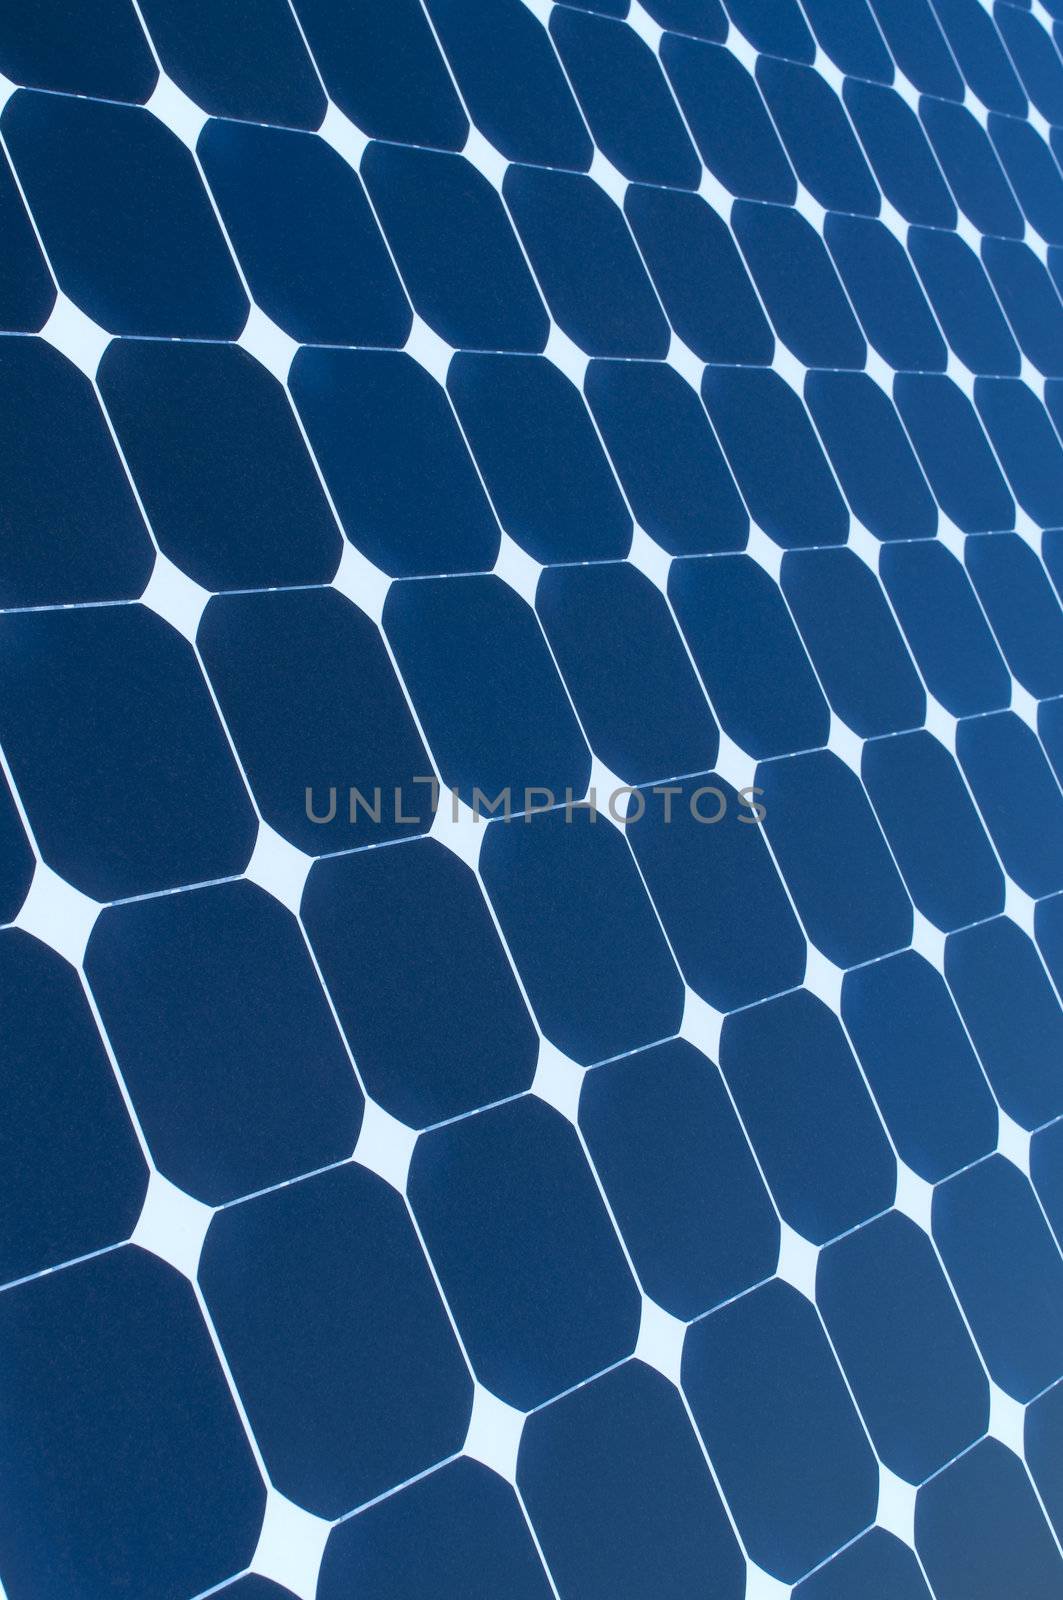 Background of Blue Solar Panel